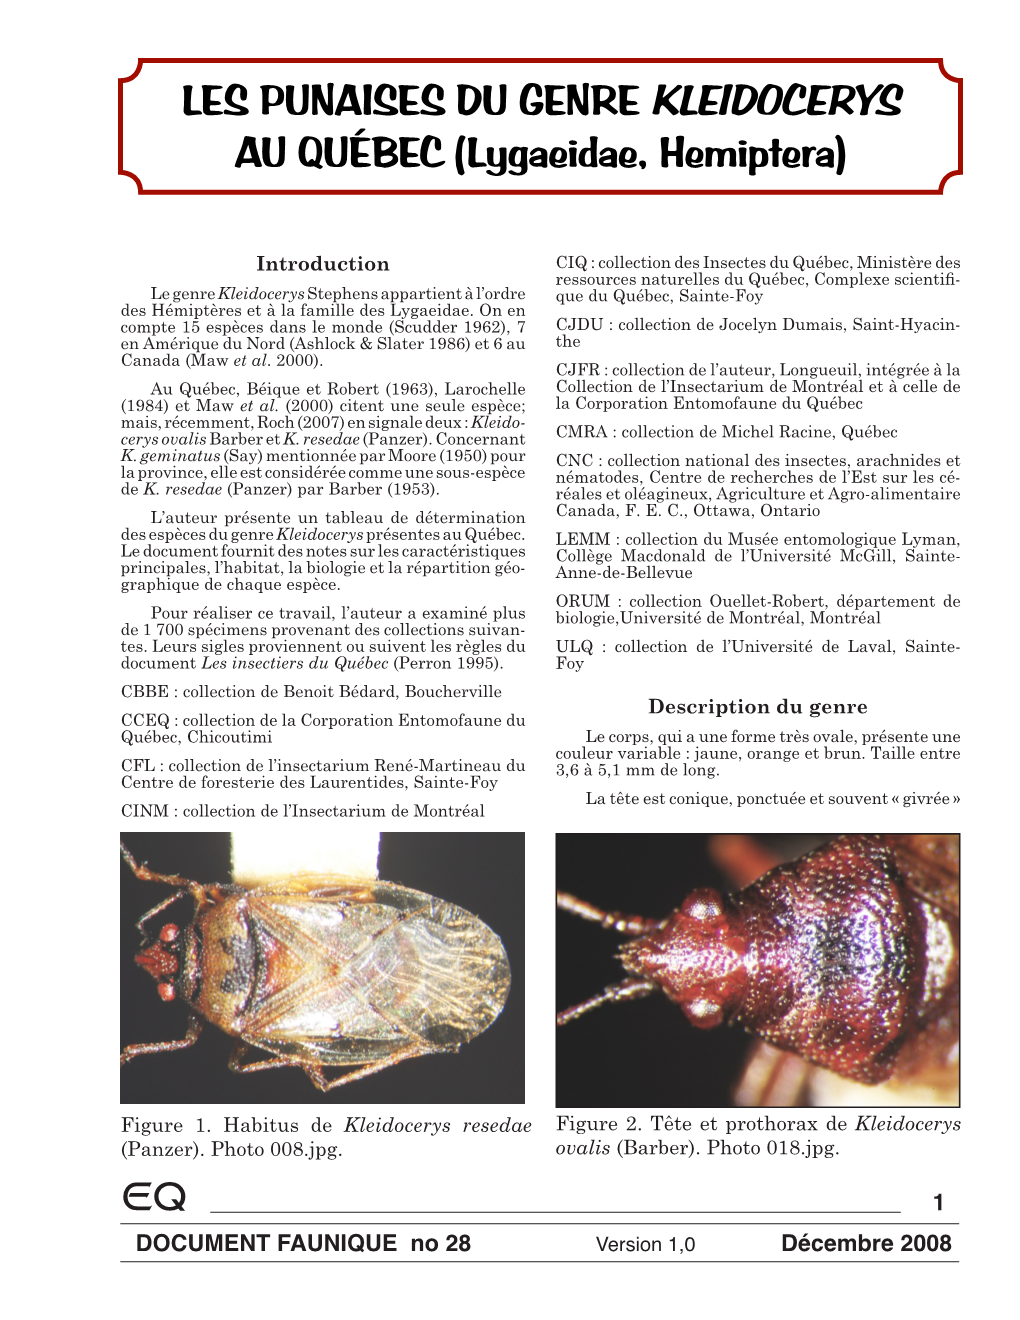 LES PUNAISES DU GENRE KLEIDOCERYS AU QUÉBEC (Lygaeidae, Hemiptera)